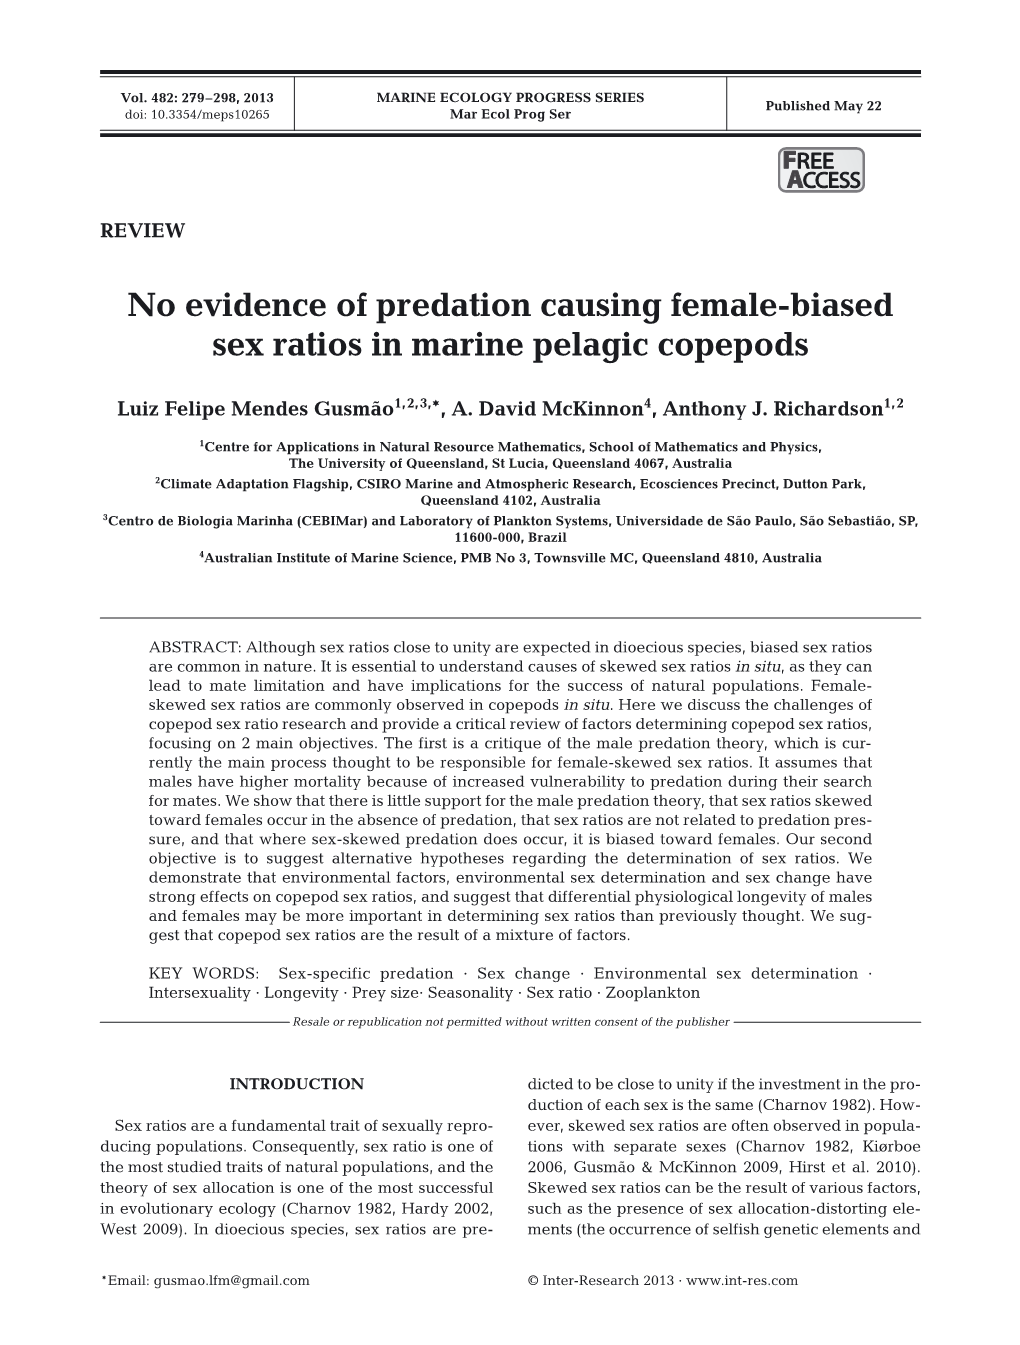 No Evidence of Predation Causing Female-Biased Sex Ratios in Marine Pelagic Copepods